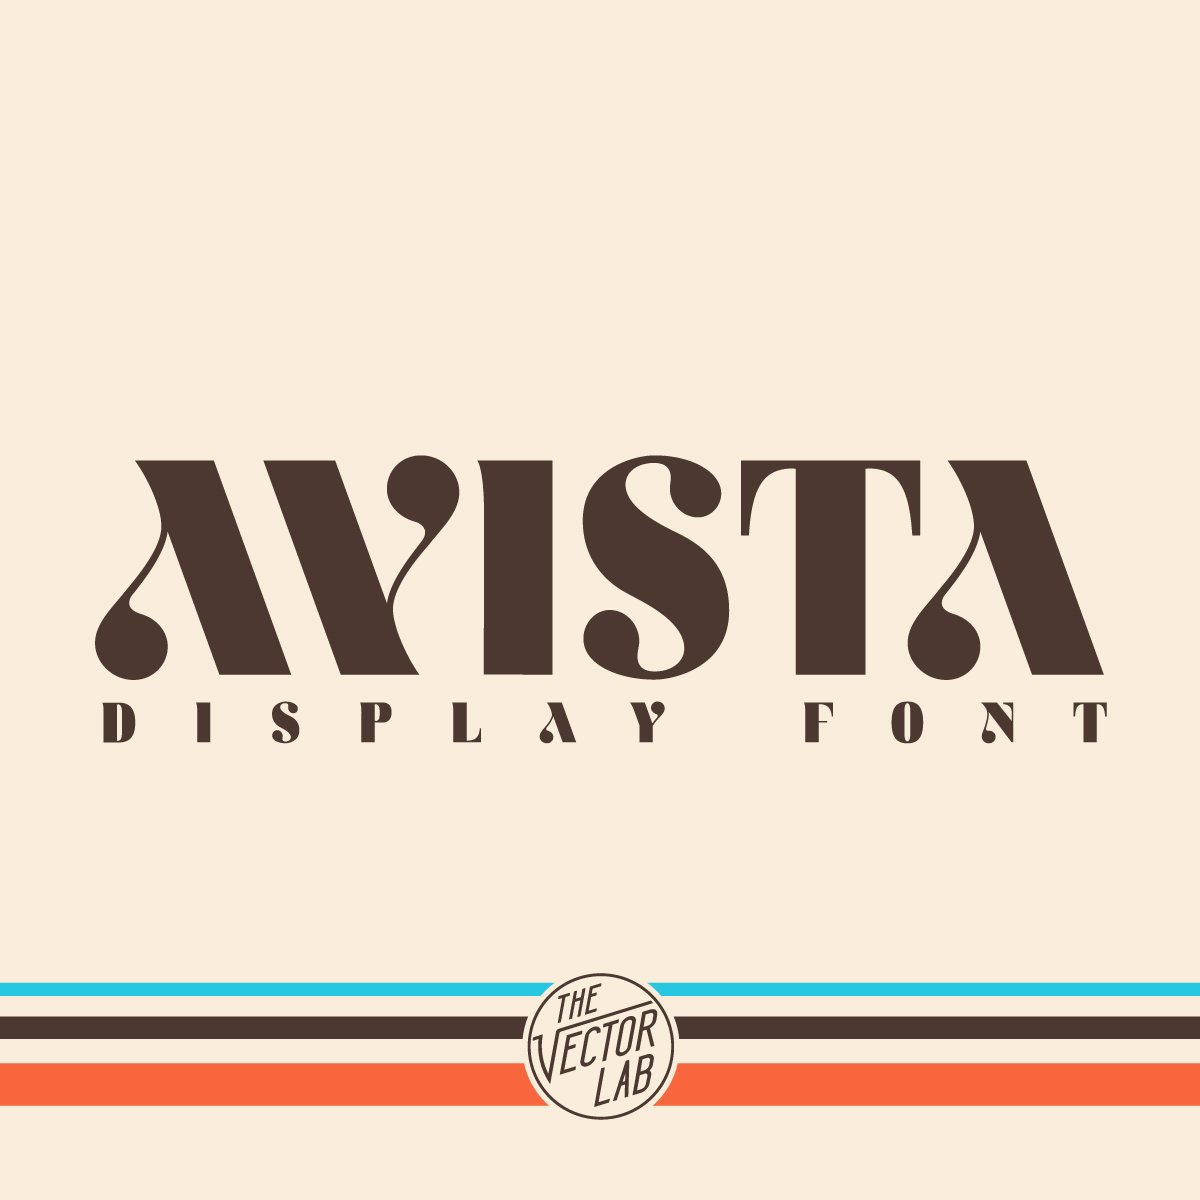 AVISTA font by Ray Dombroski & TheVectorLab